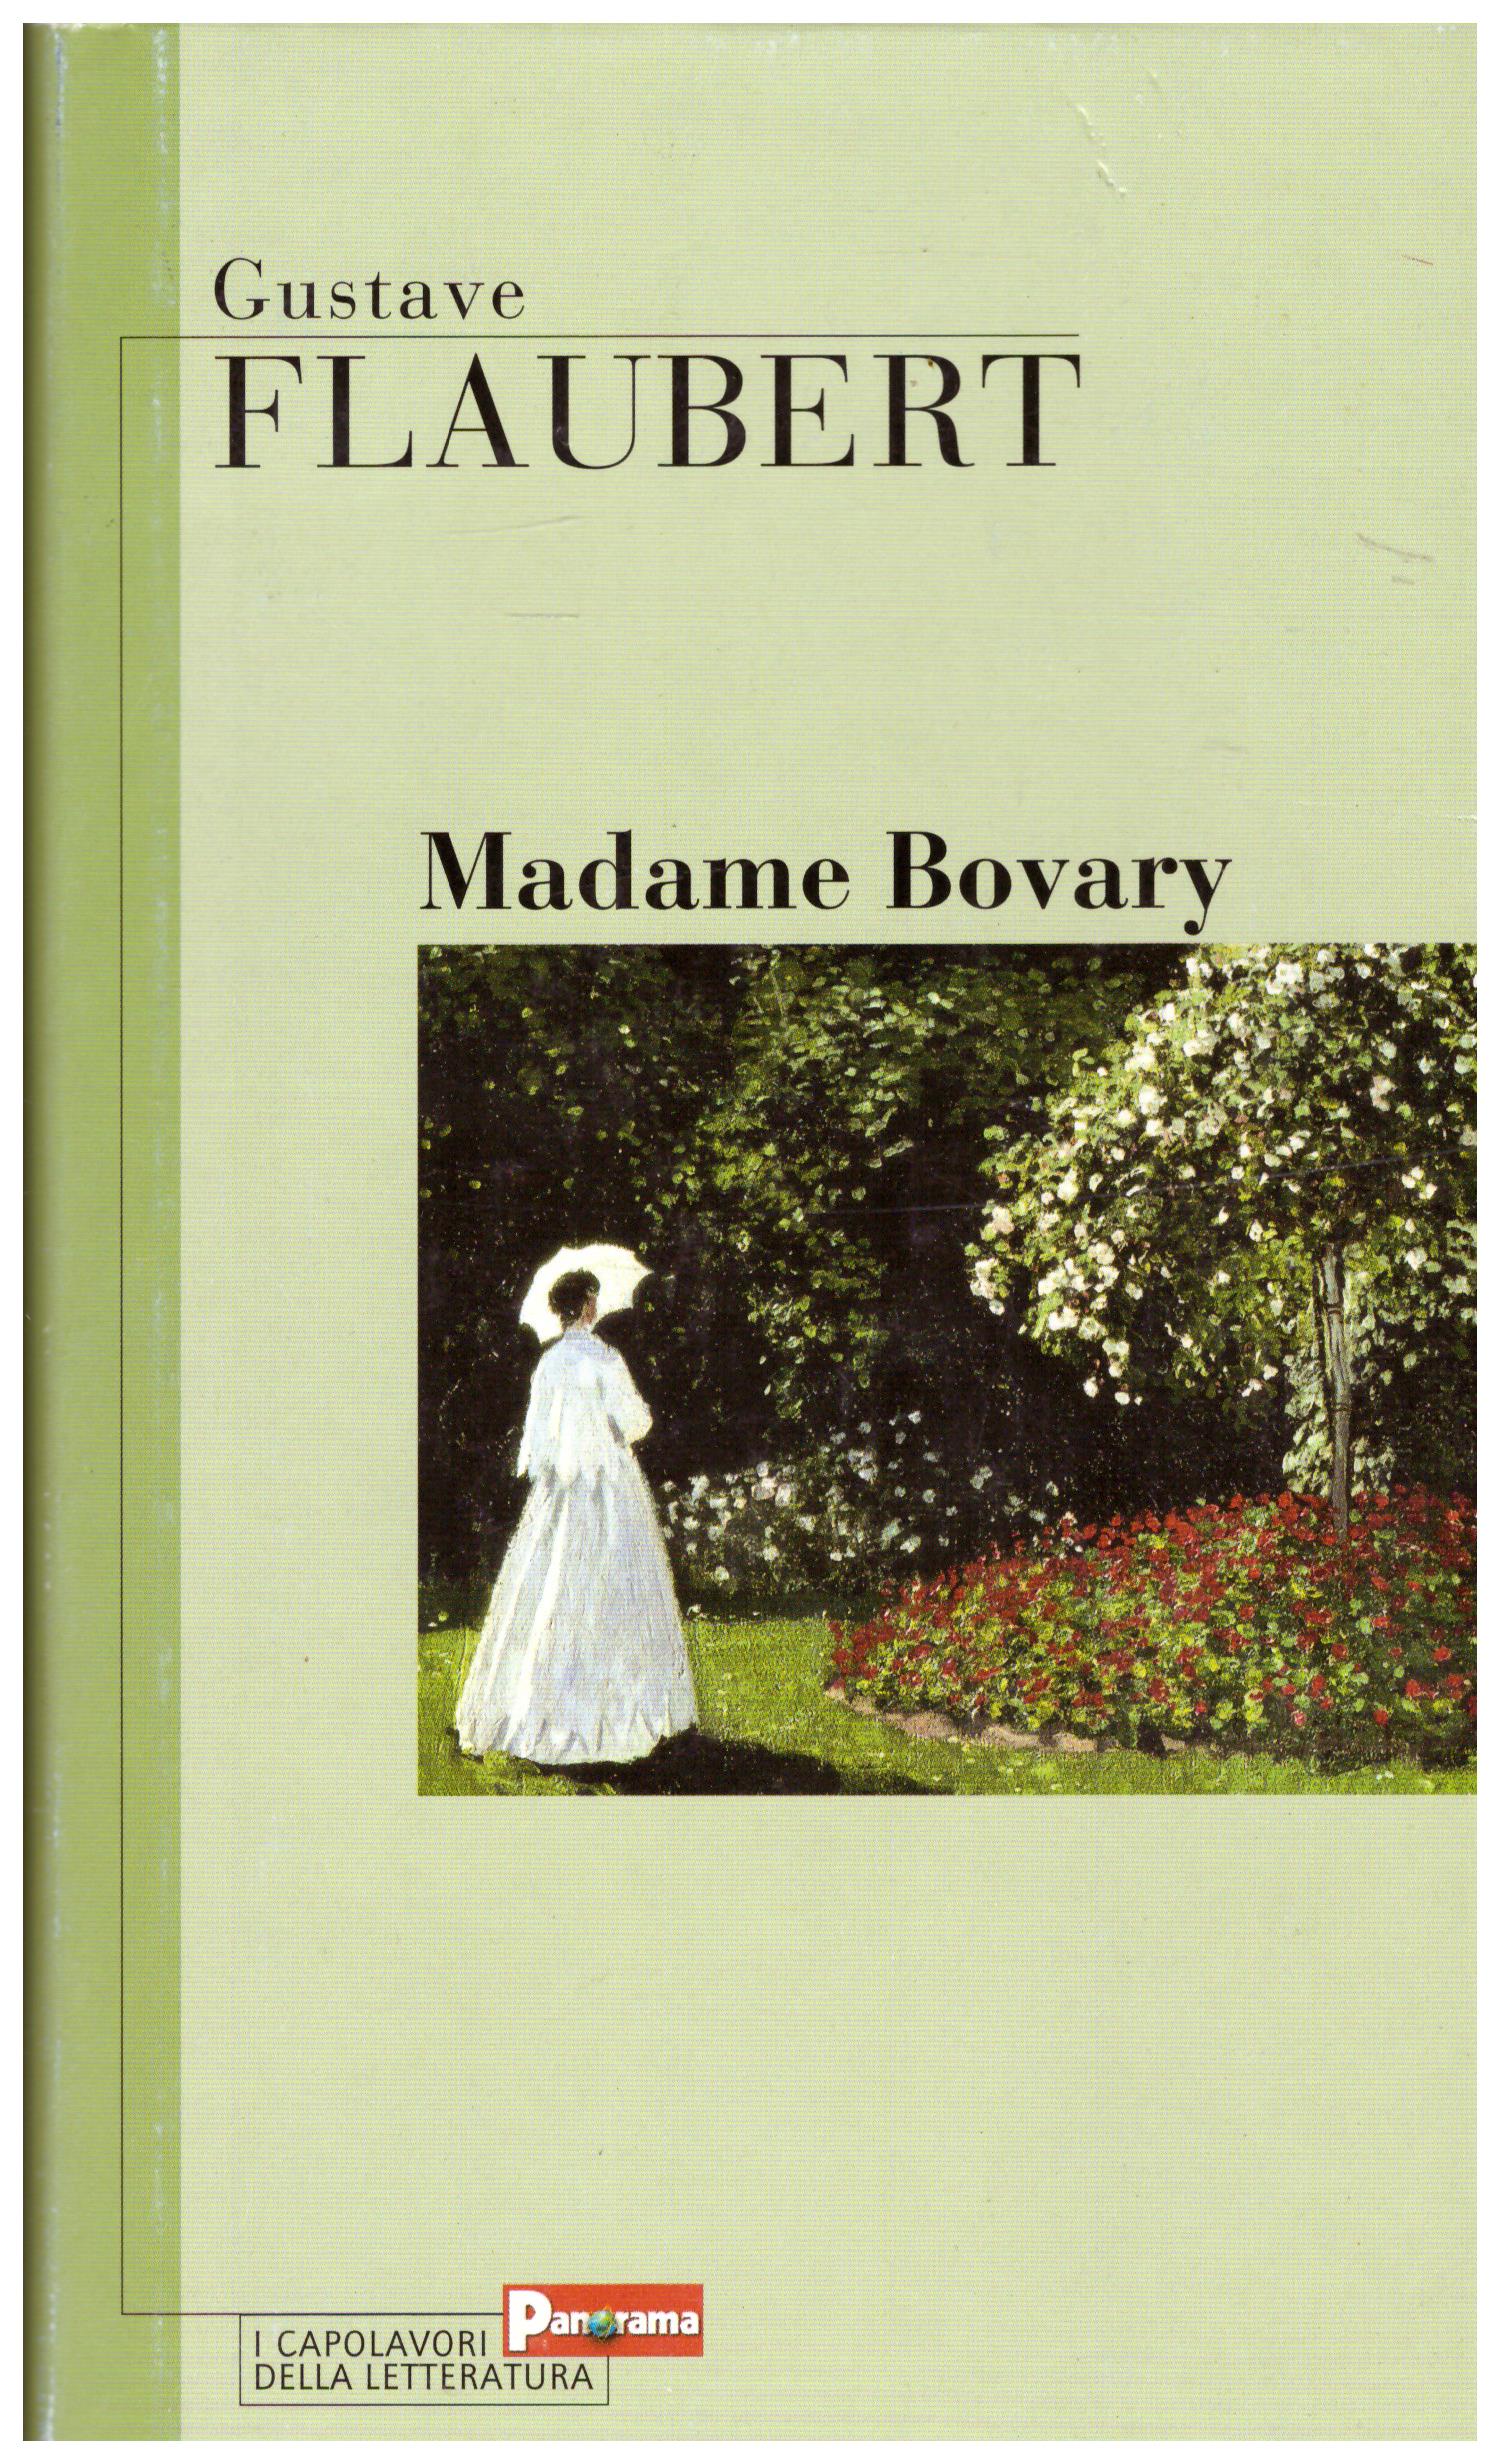 Titolo: Madame Bovary Autore: Gustave Flaubert Editore: Panorama, 2003